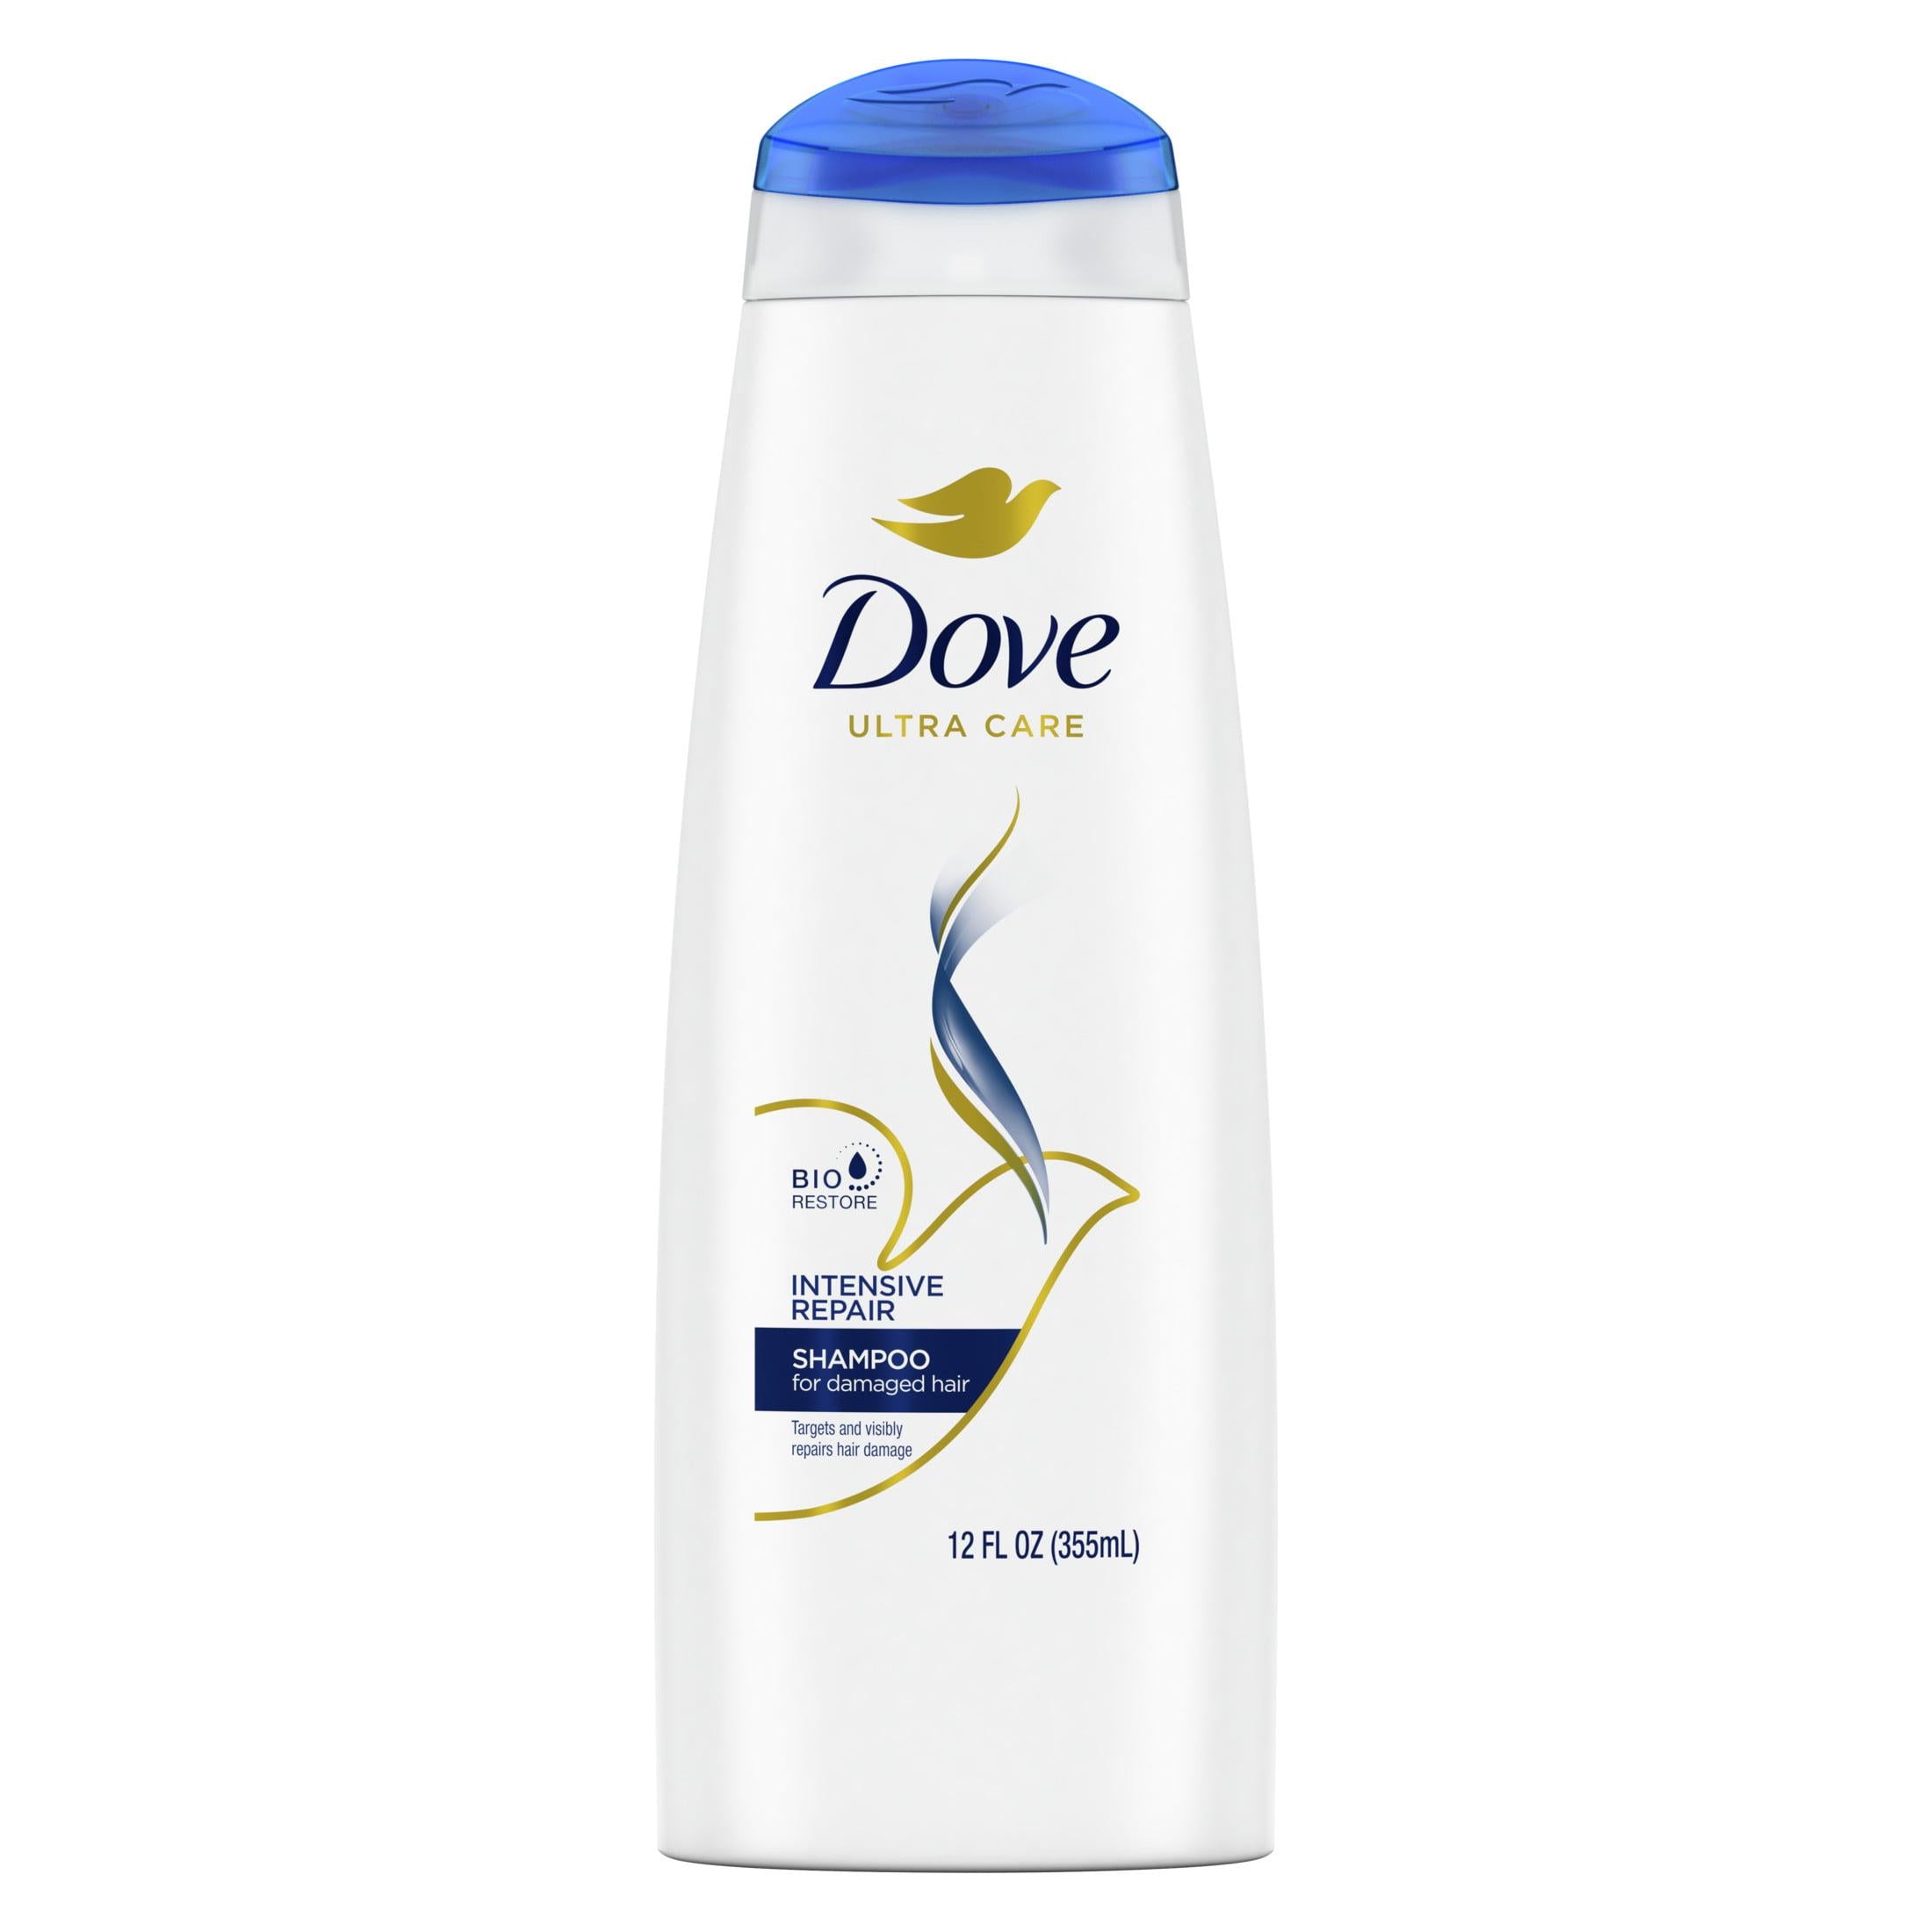 Dove Ultra Care Nourishing Intensive Repair Daily Shampoo for Damaged Hair, 12 fl oz | MTTS449